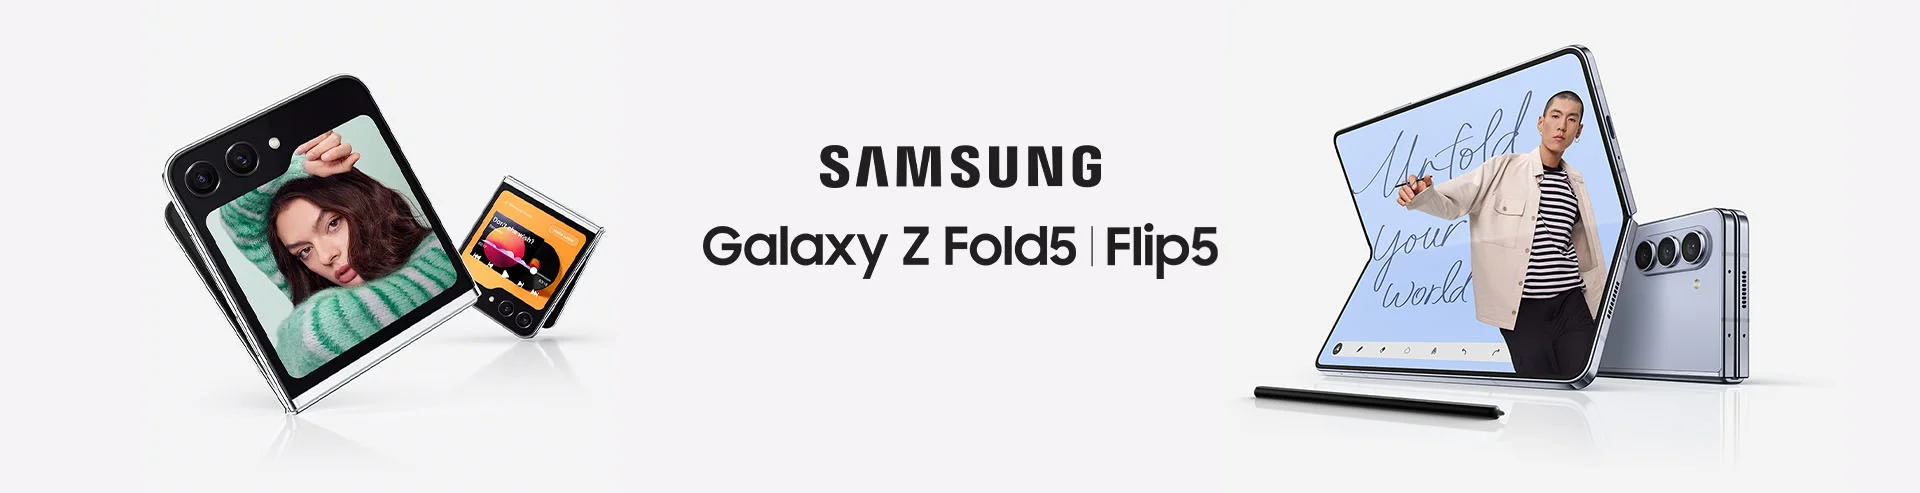 VM-Hero-Samsung Fold & Flip 5-Generic-1920x493.webp